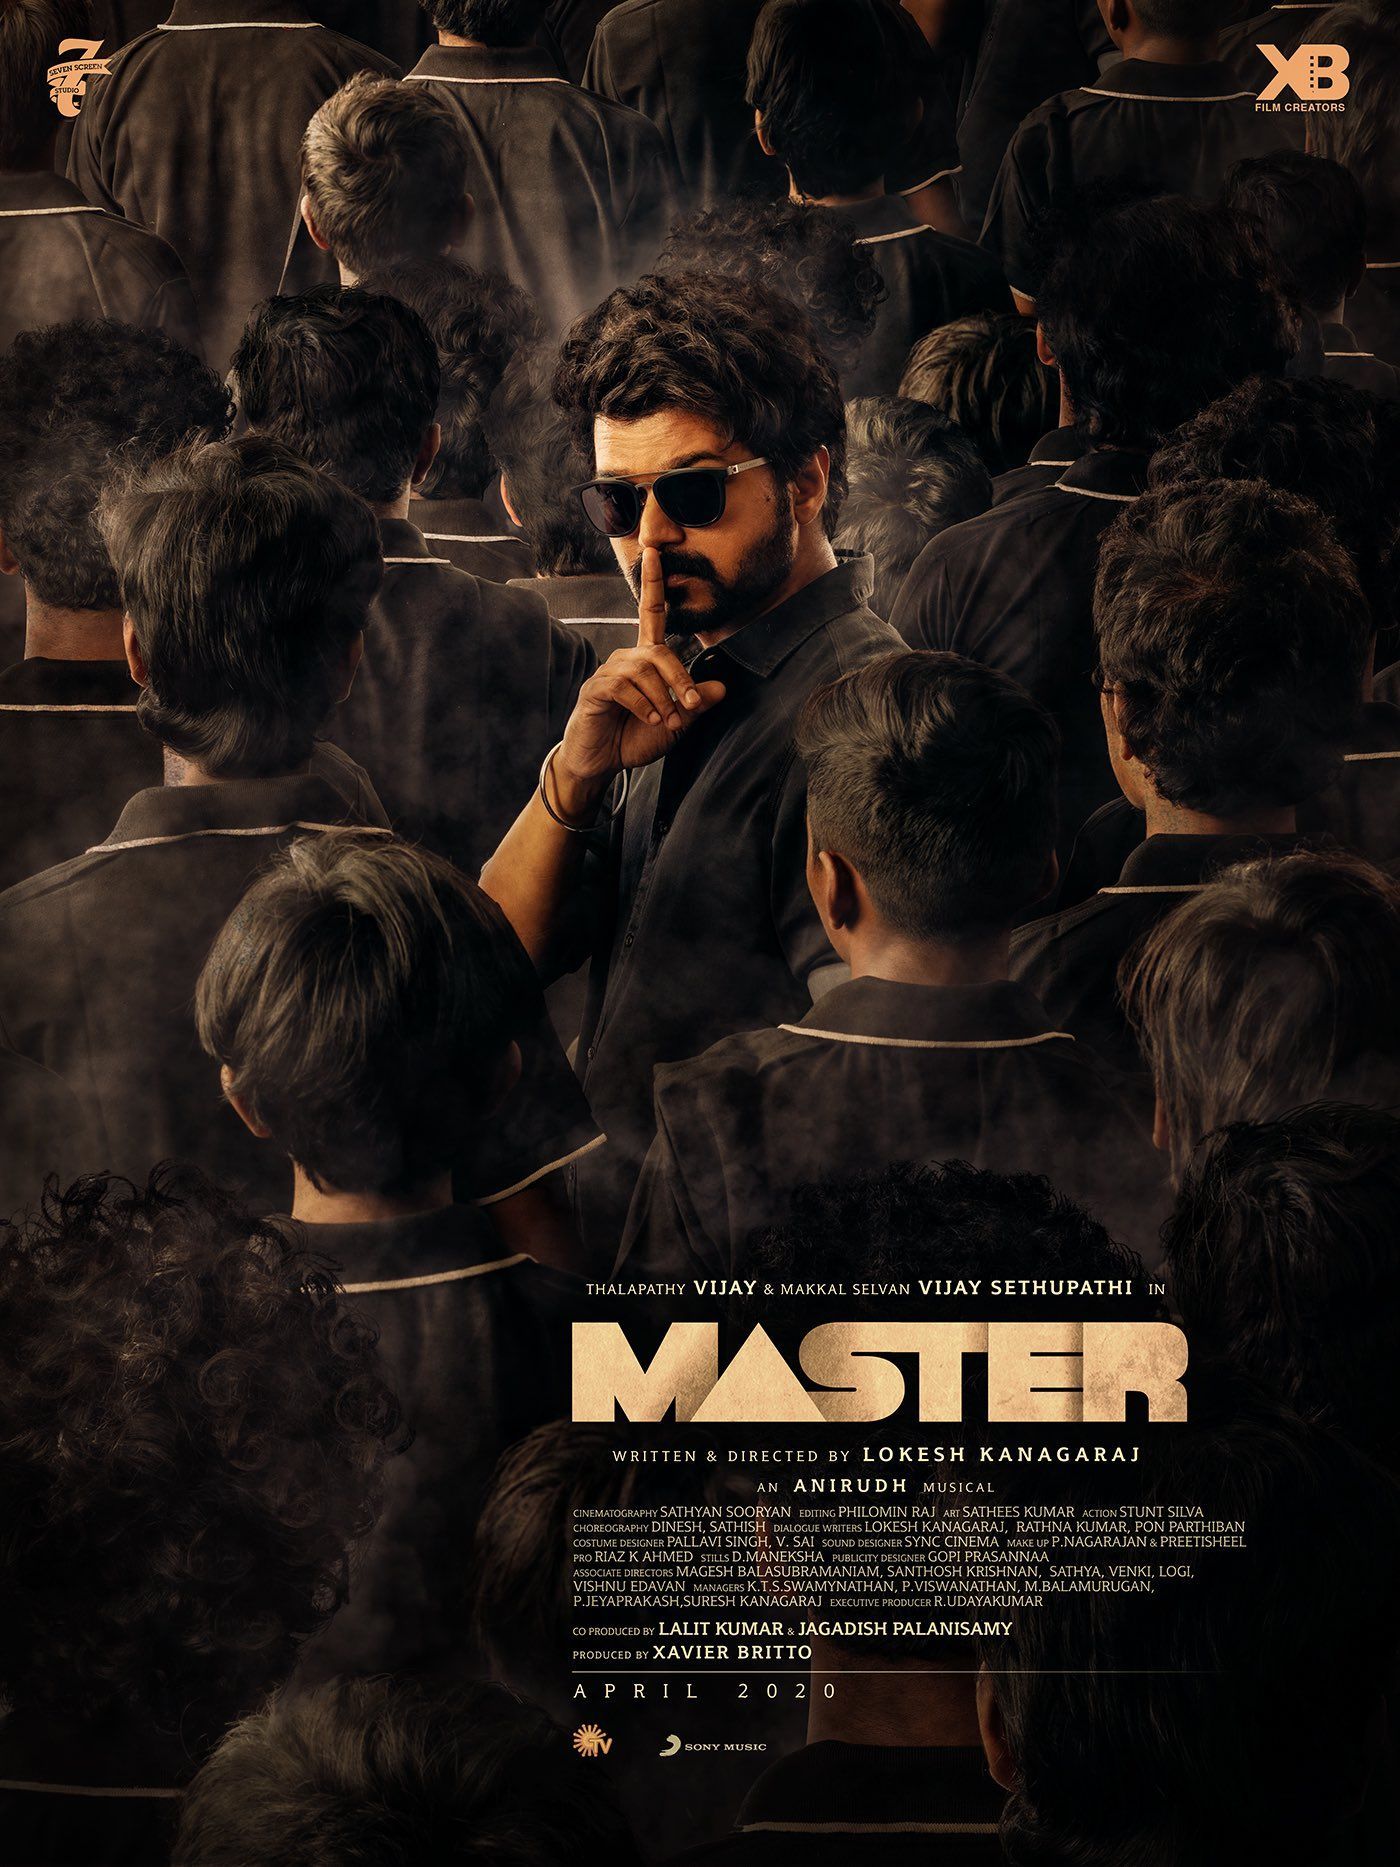 Vijay Master Movie Poster Wallpapers